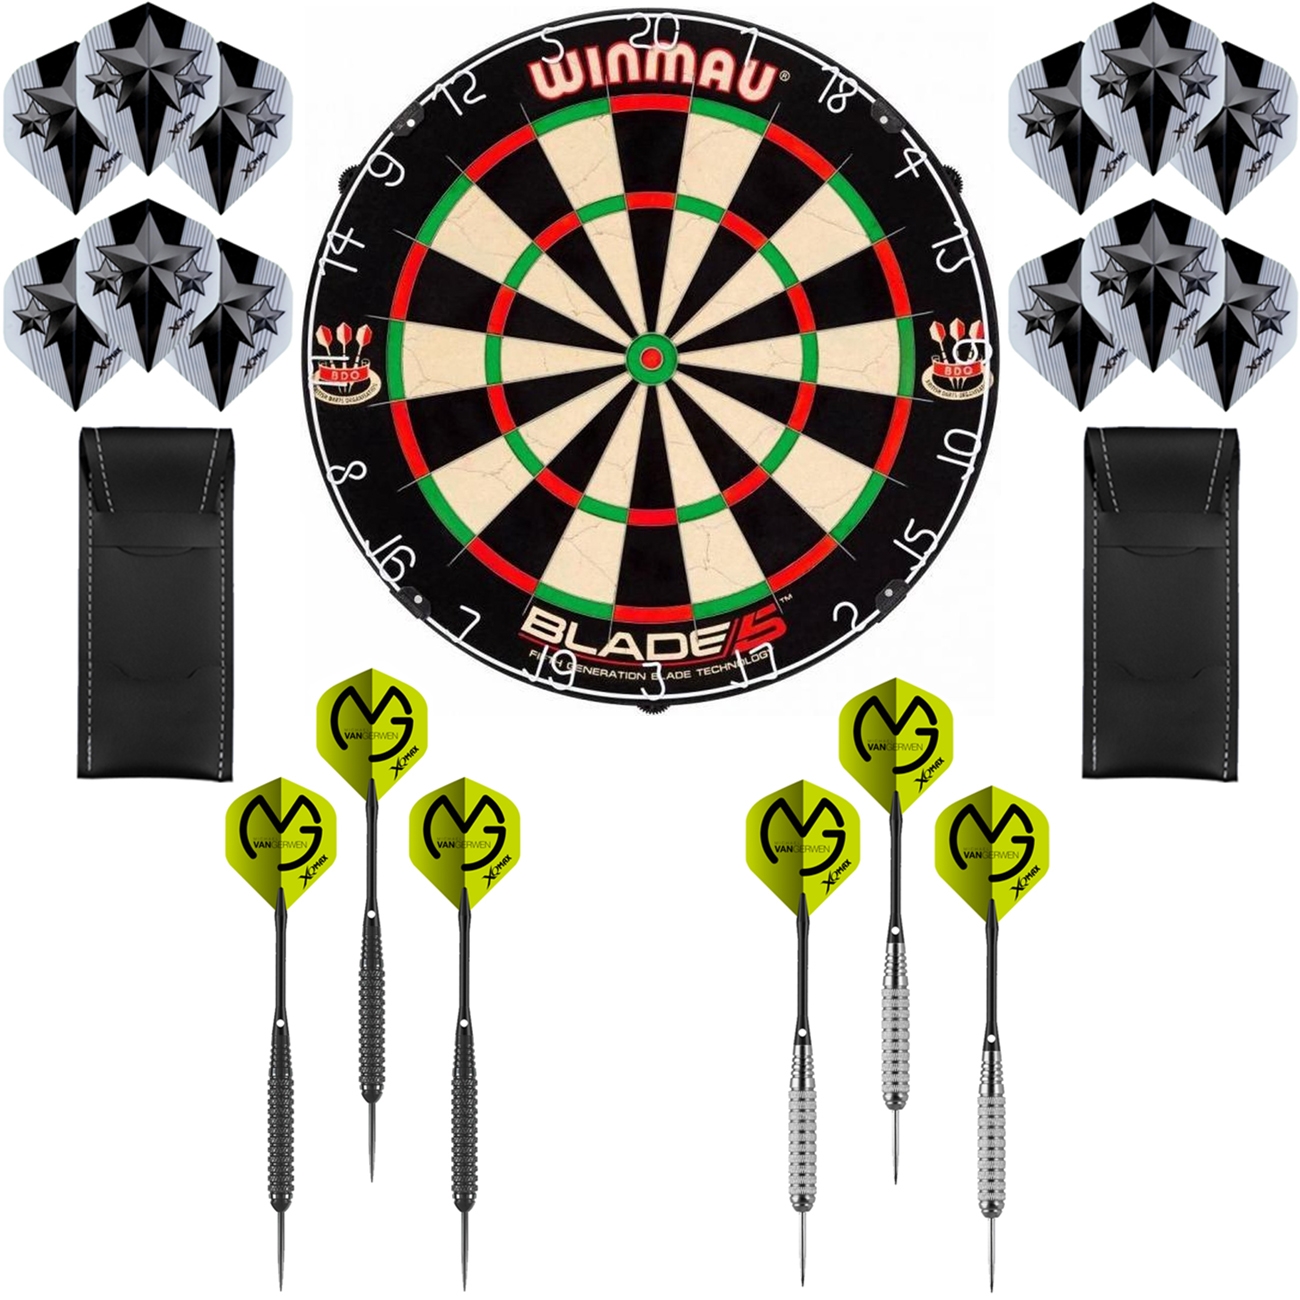 Dragon Darts Michael van Gerwen Precision set – – 2 sets dartpijlen dart shafts – dart flights – Winmau Blade 5 dartbord -